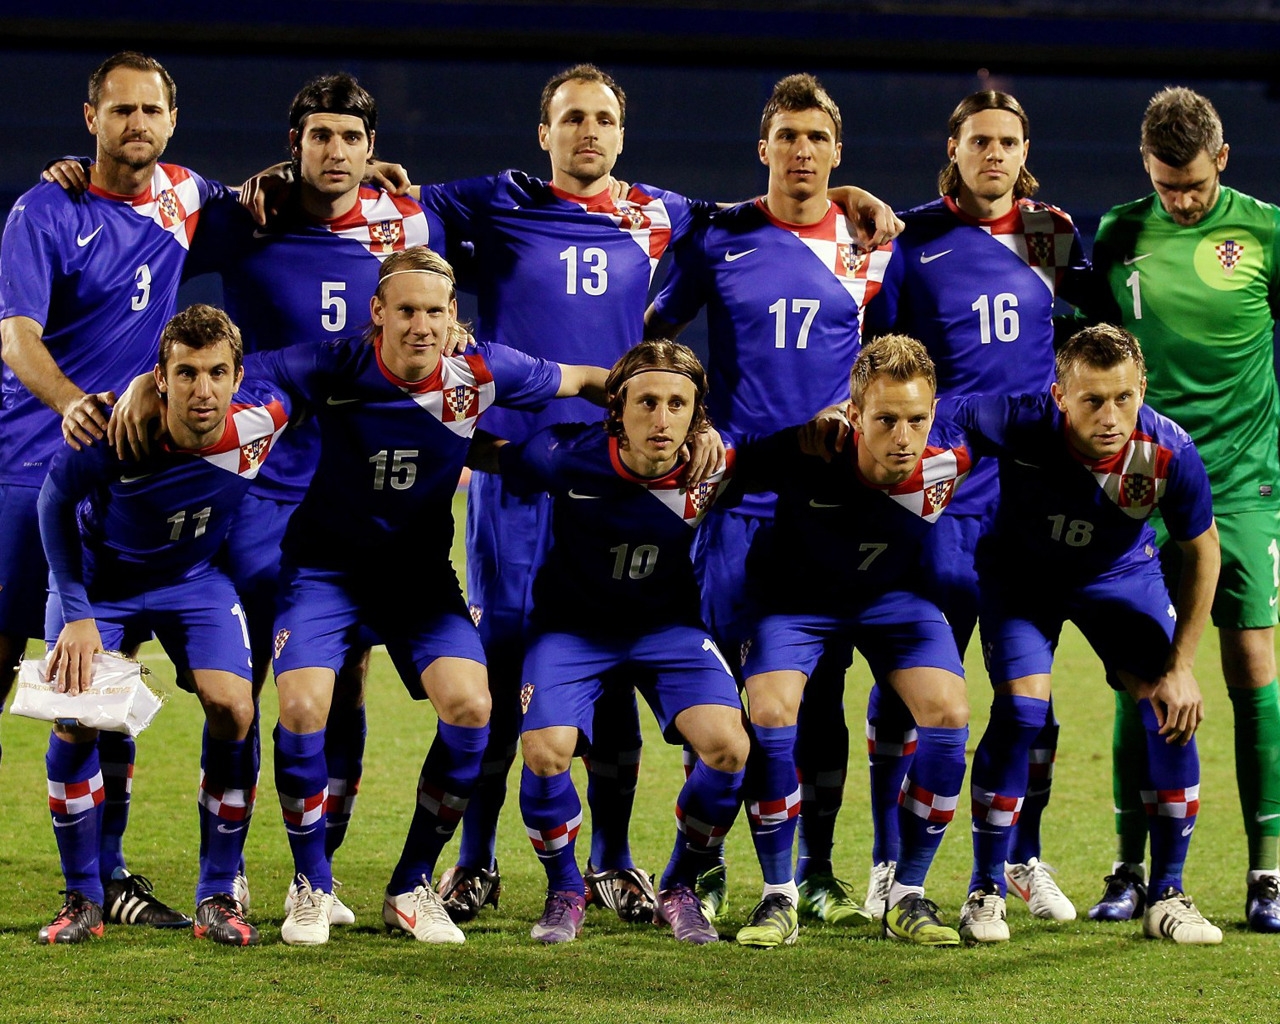 Croatia National Team for 1280 x 1024 resolution